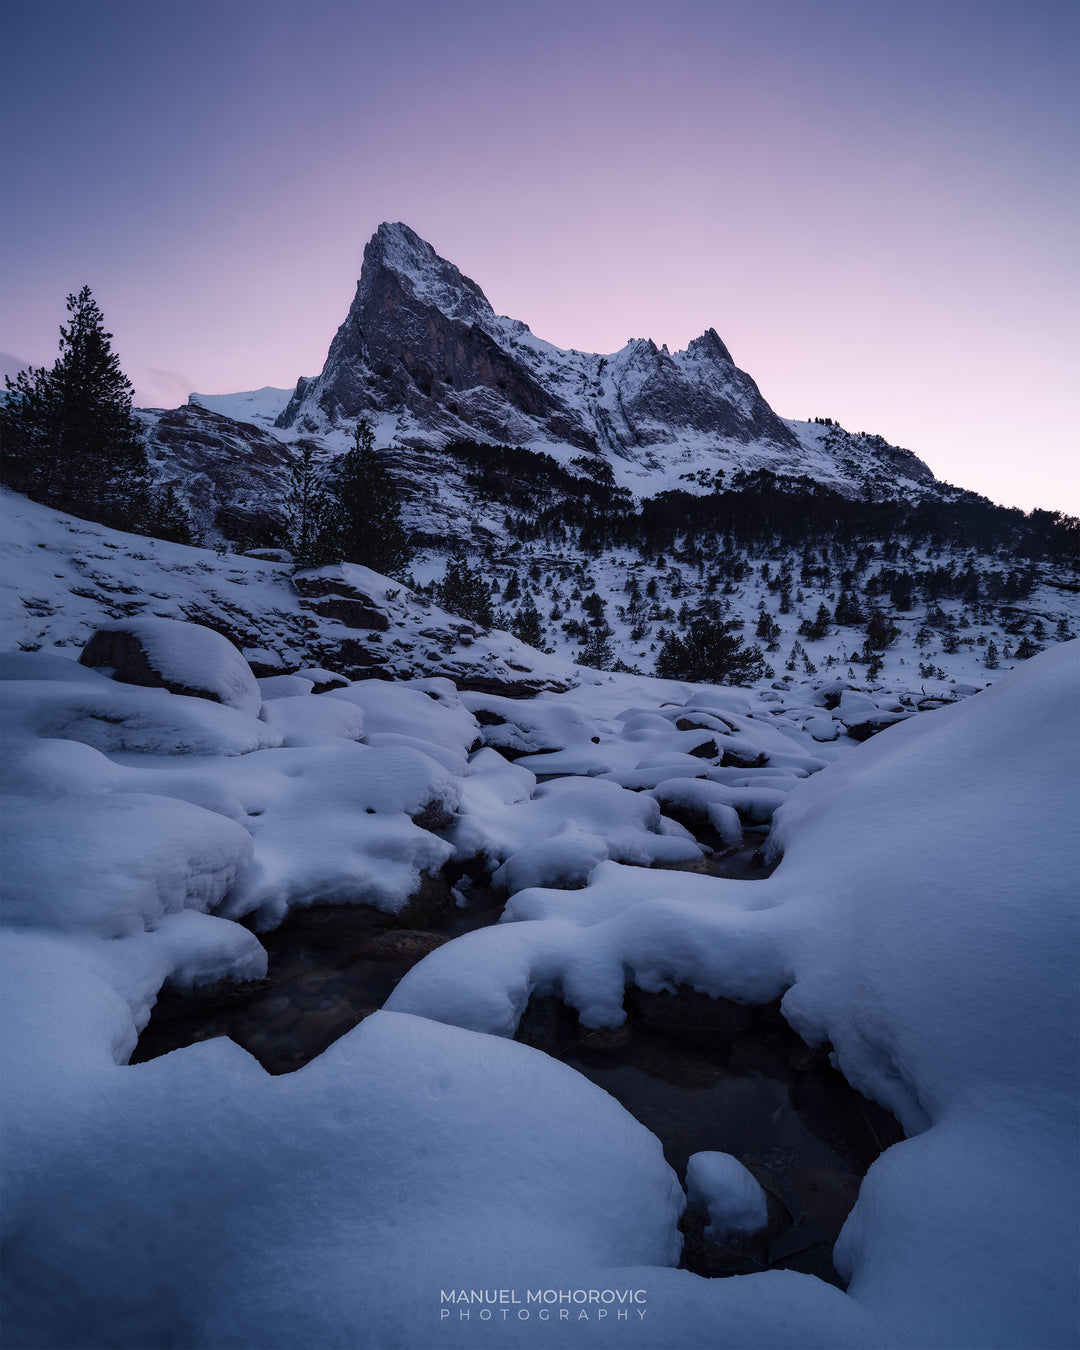 Rosenlaui Winter Magic | Landscape Photography Workshop